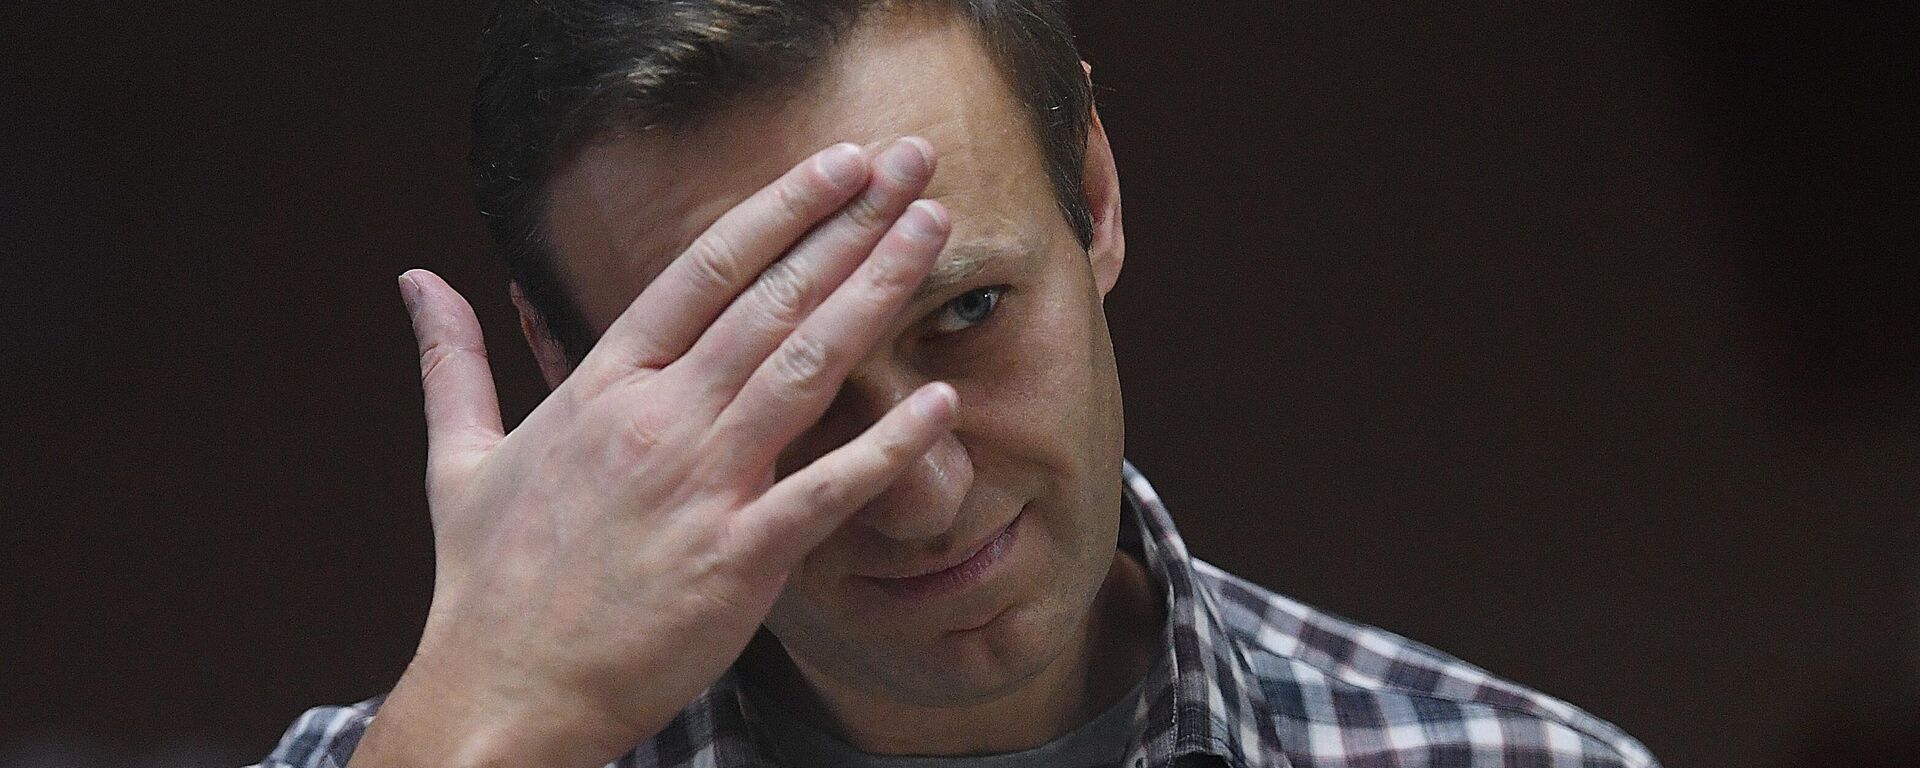 Alexéi Navalni, bloguero opositor ruso - Sputnik Mundo, 1920, 02.11.2021